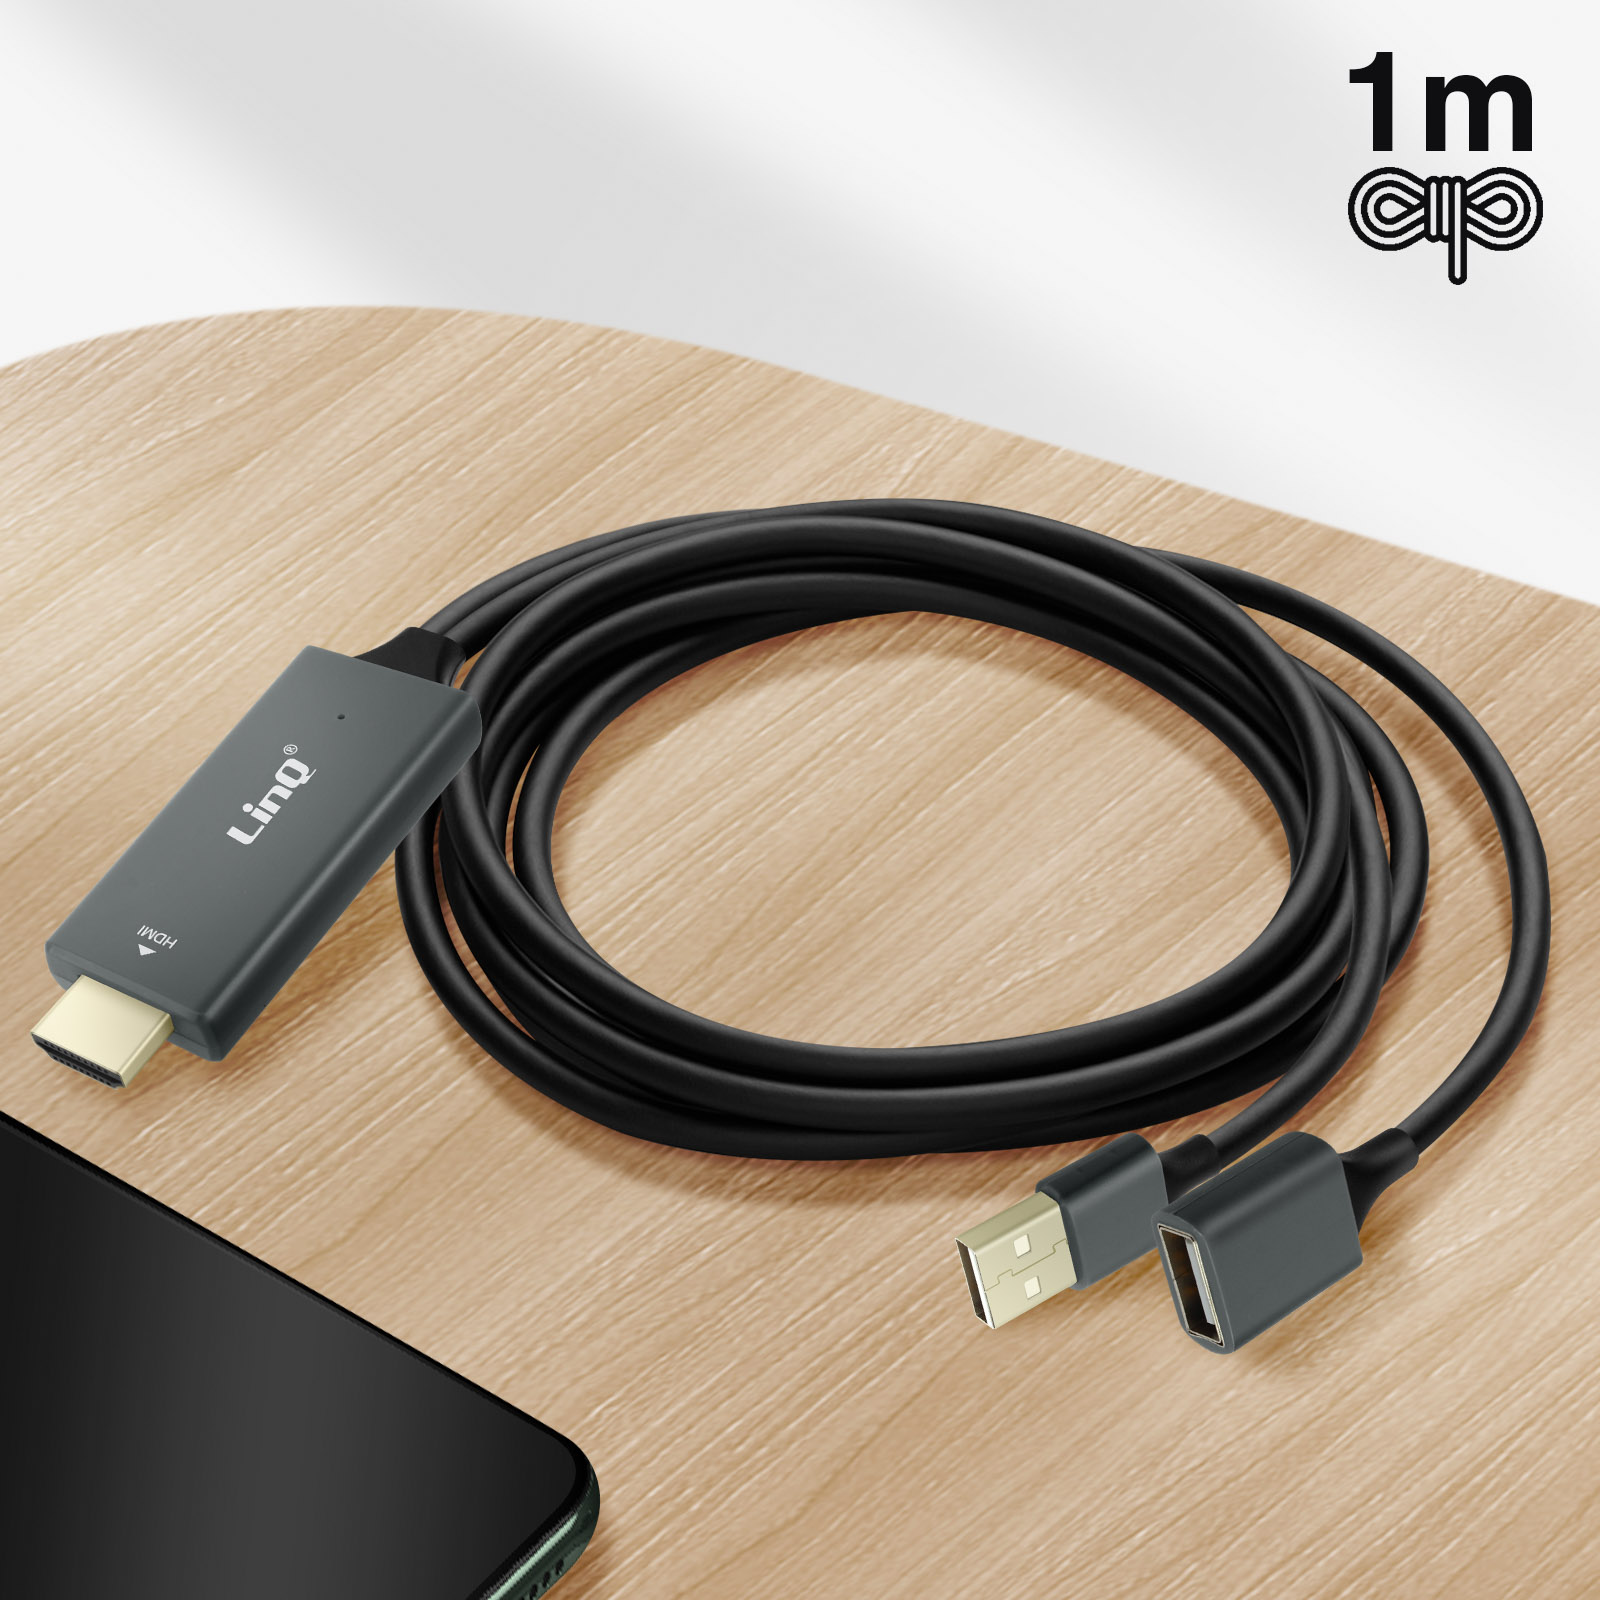 Cable Adaptador HDMI Teléfonos Móviles Tablets Android iOS iPhone